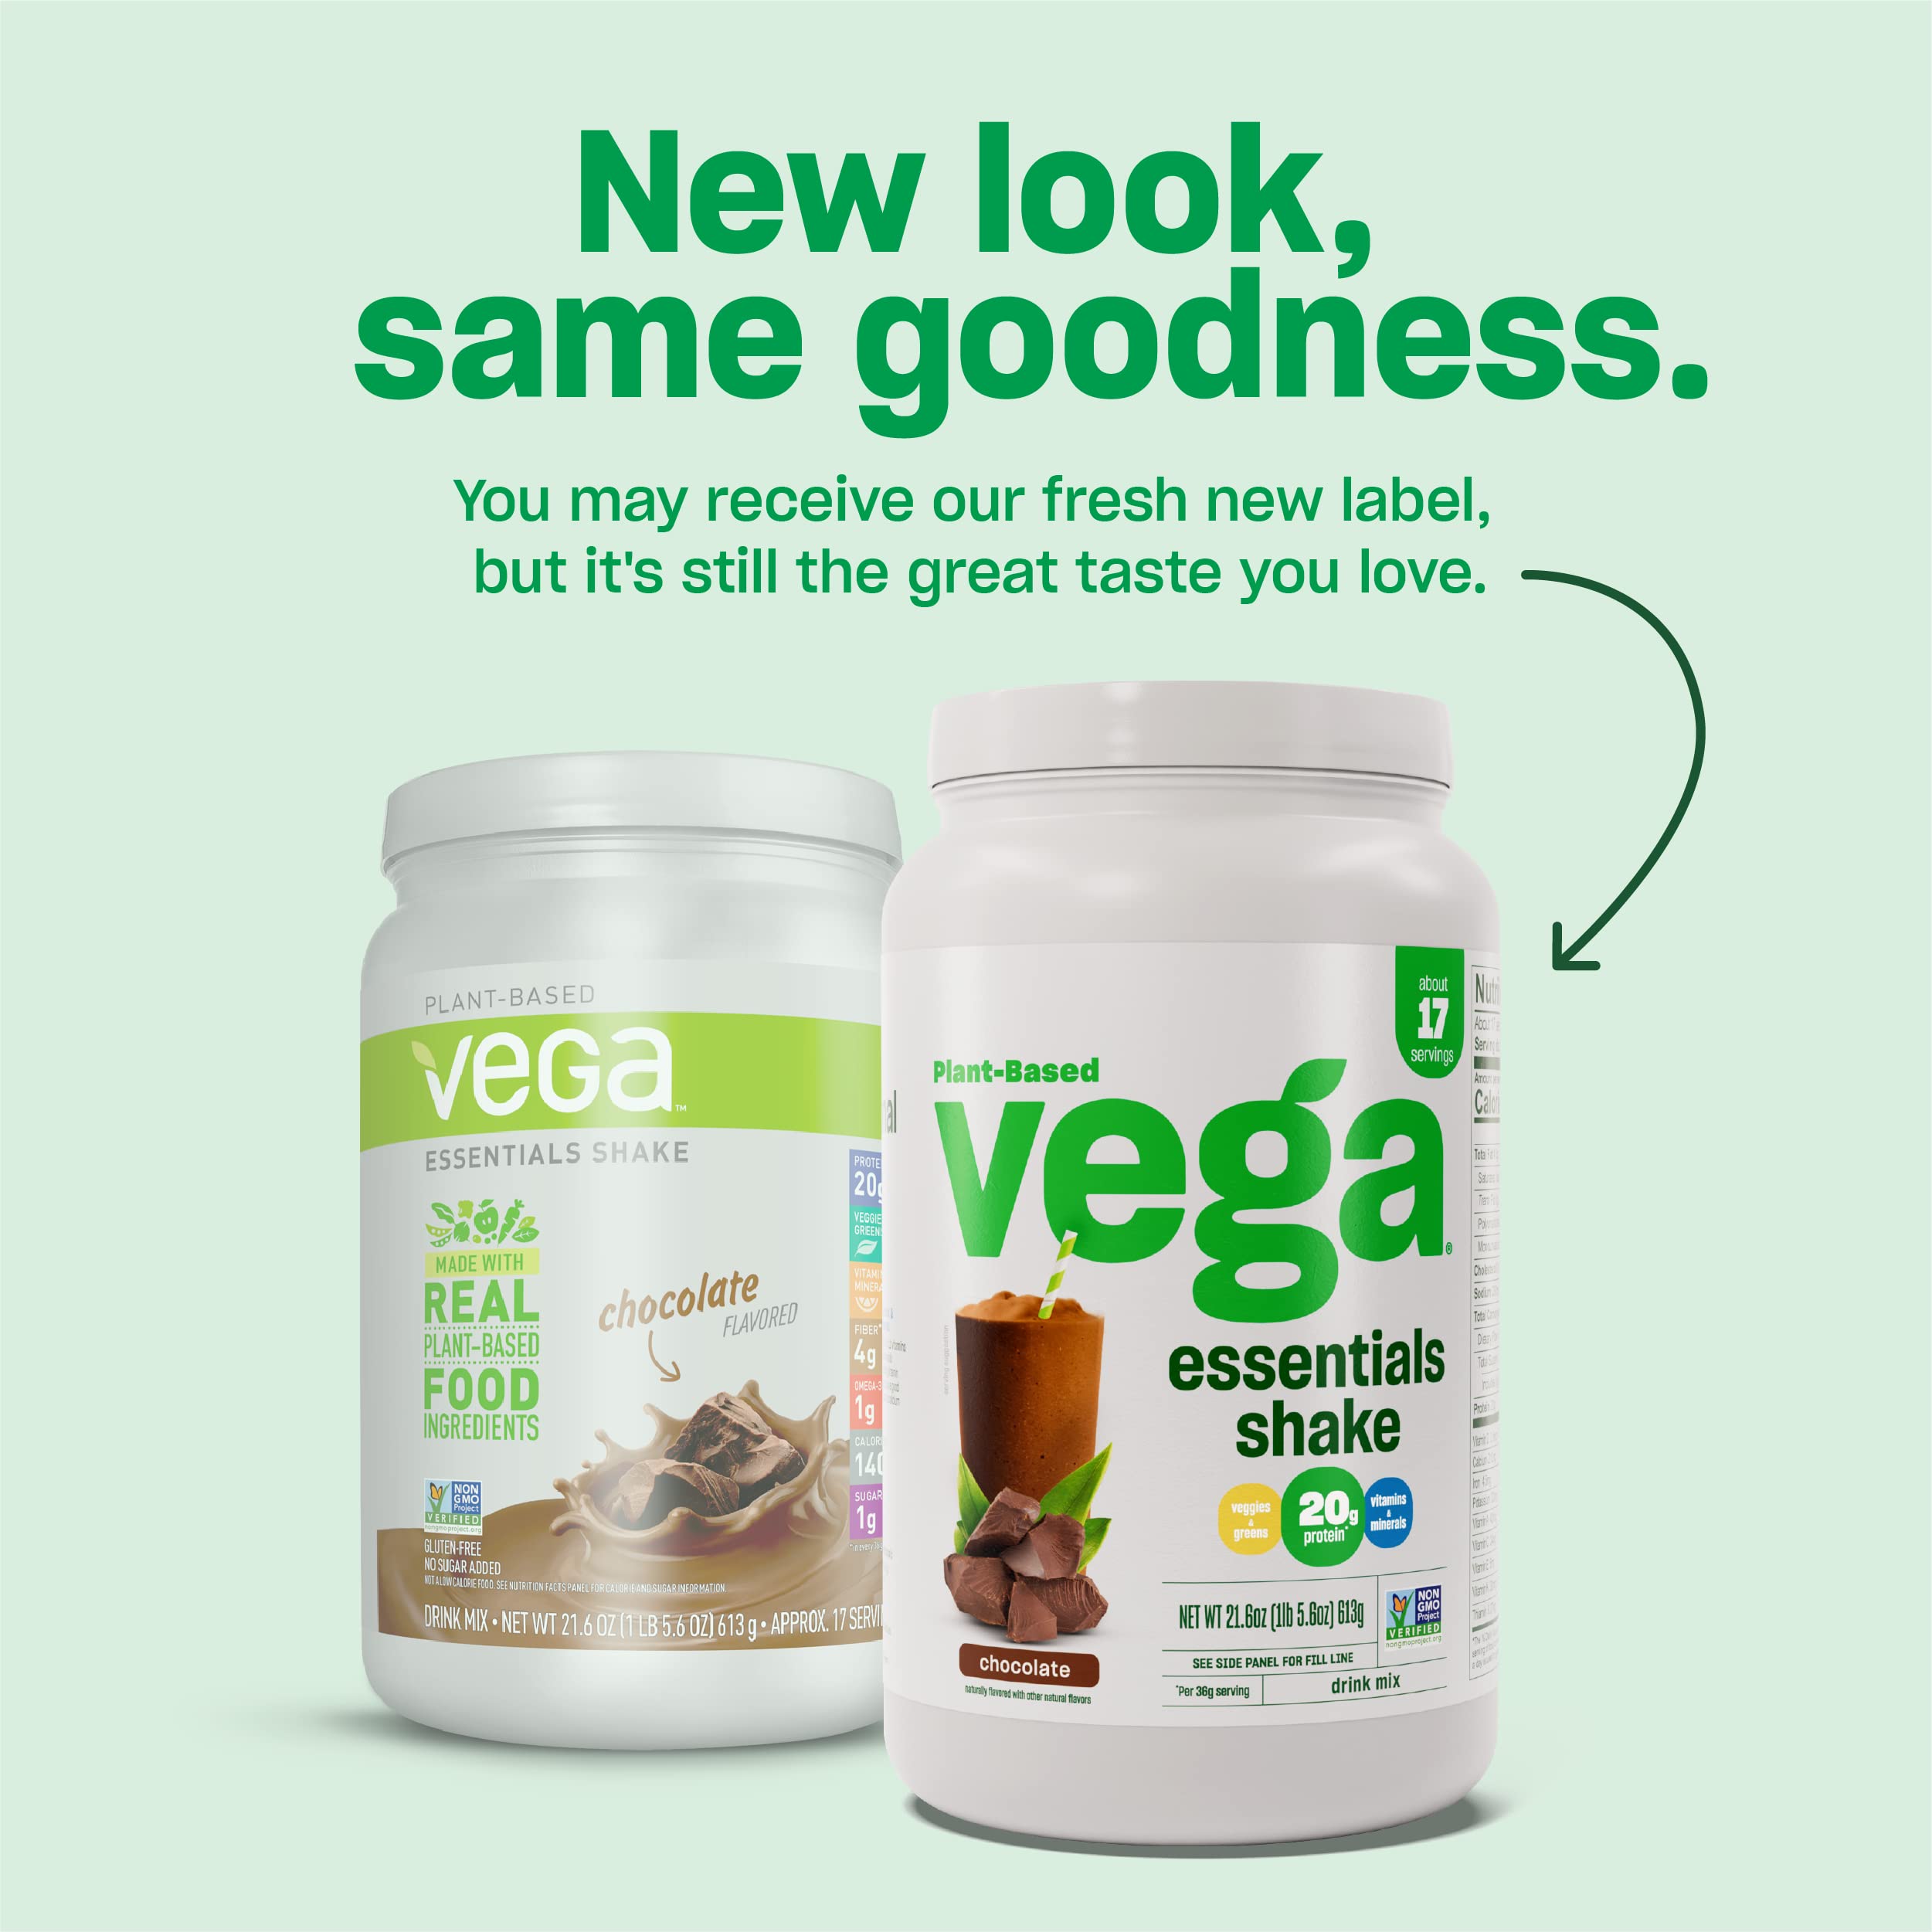 Vega Essentials Plant Based Protein Powder, Mocha - Vegan, Superfood, Vitamins, Antioxidants, Keto, Low Carb, Dairy Free, Gluten Free, Pea Protein for Women & Men, 1.4 lbs (Packaging May Vary)